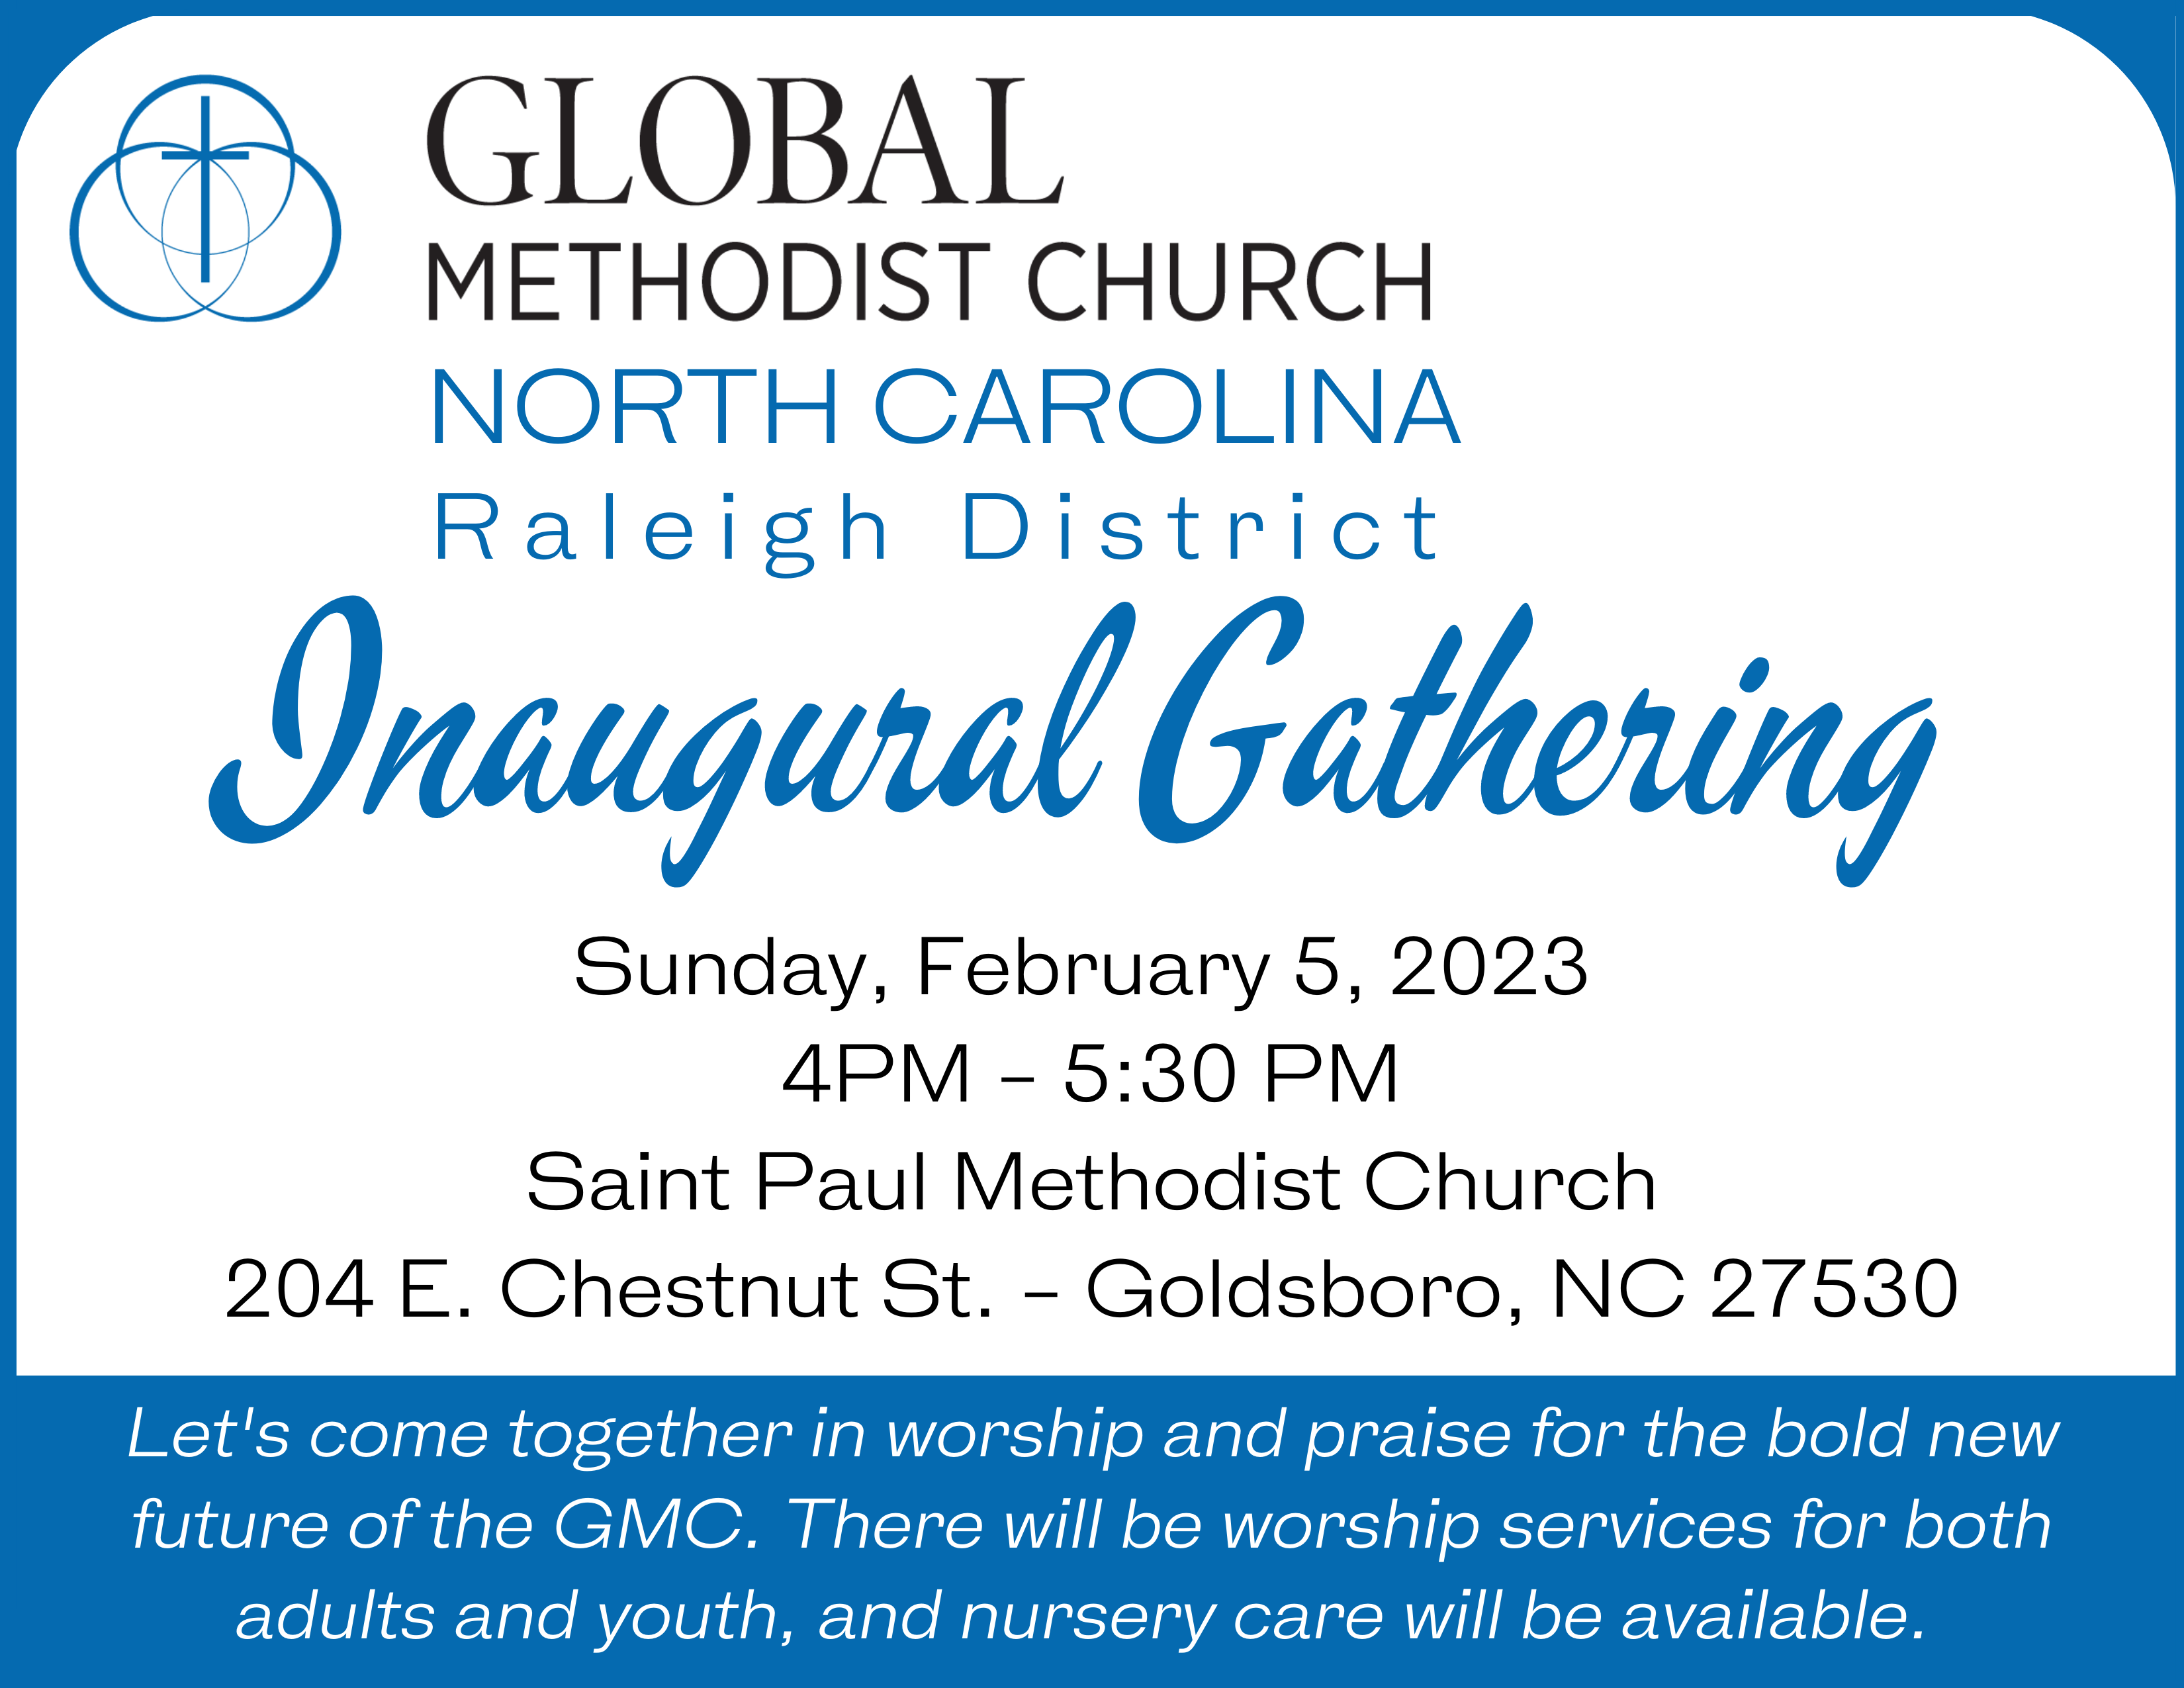 Inaugural Gathering of the North Carolina, Raleigh District Global Methodist Church